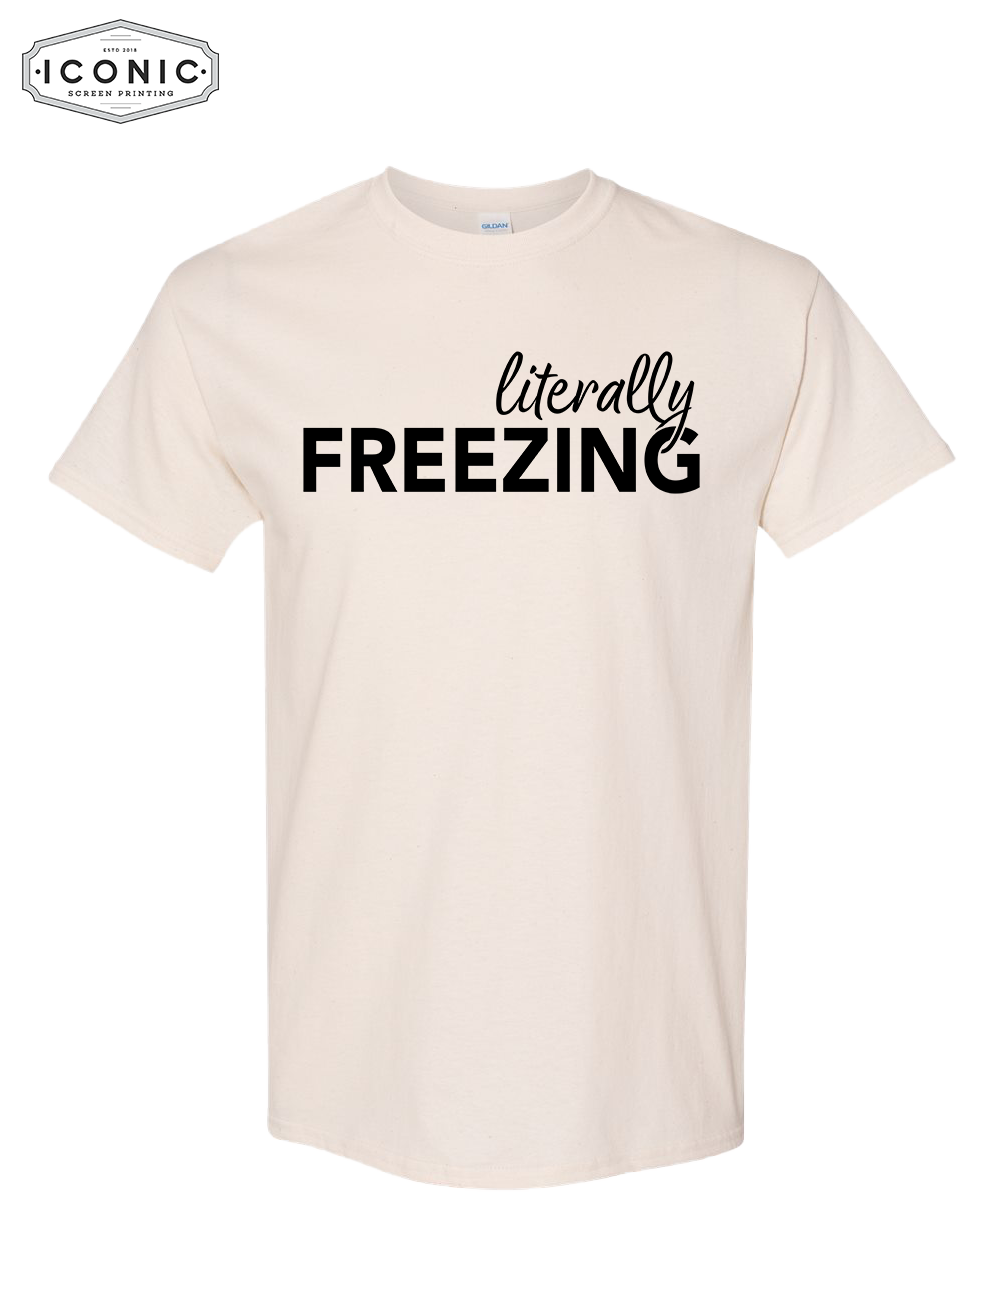 Literally Freezing - DryBlend T-shirt